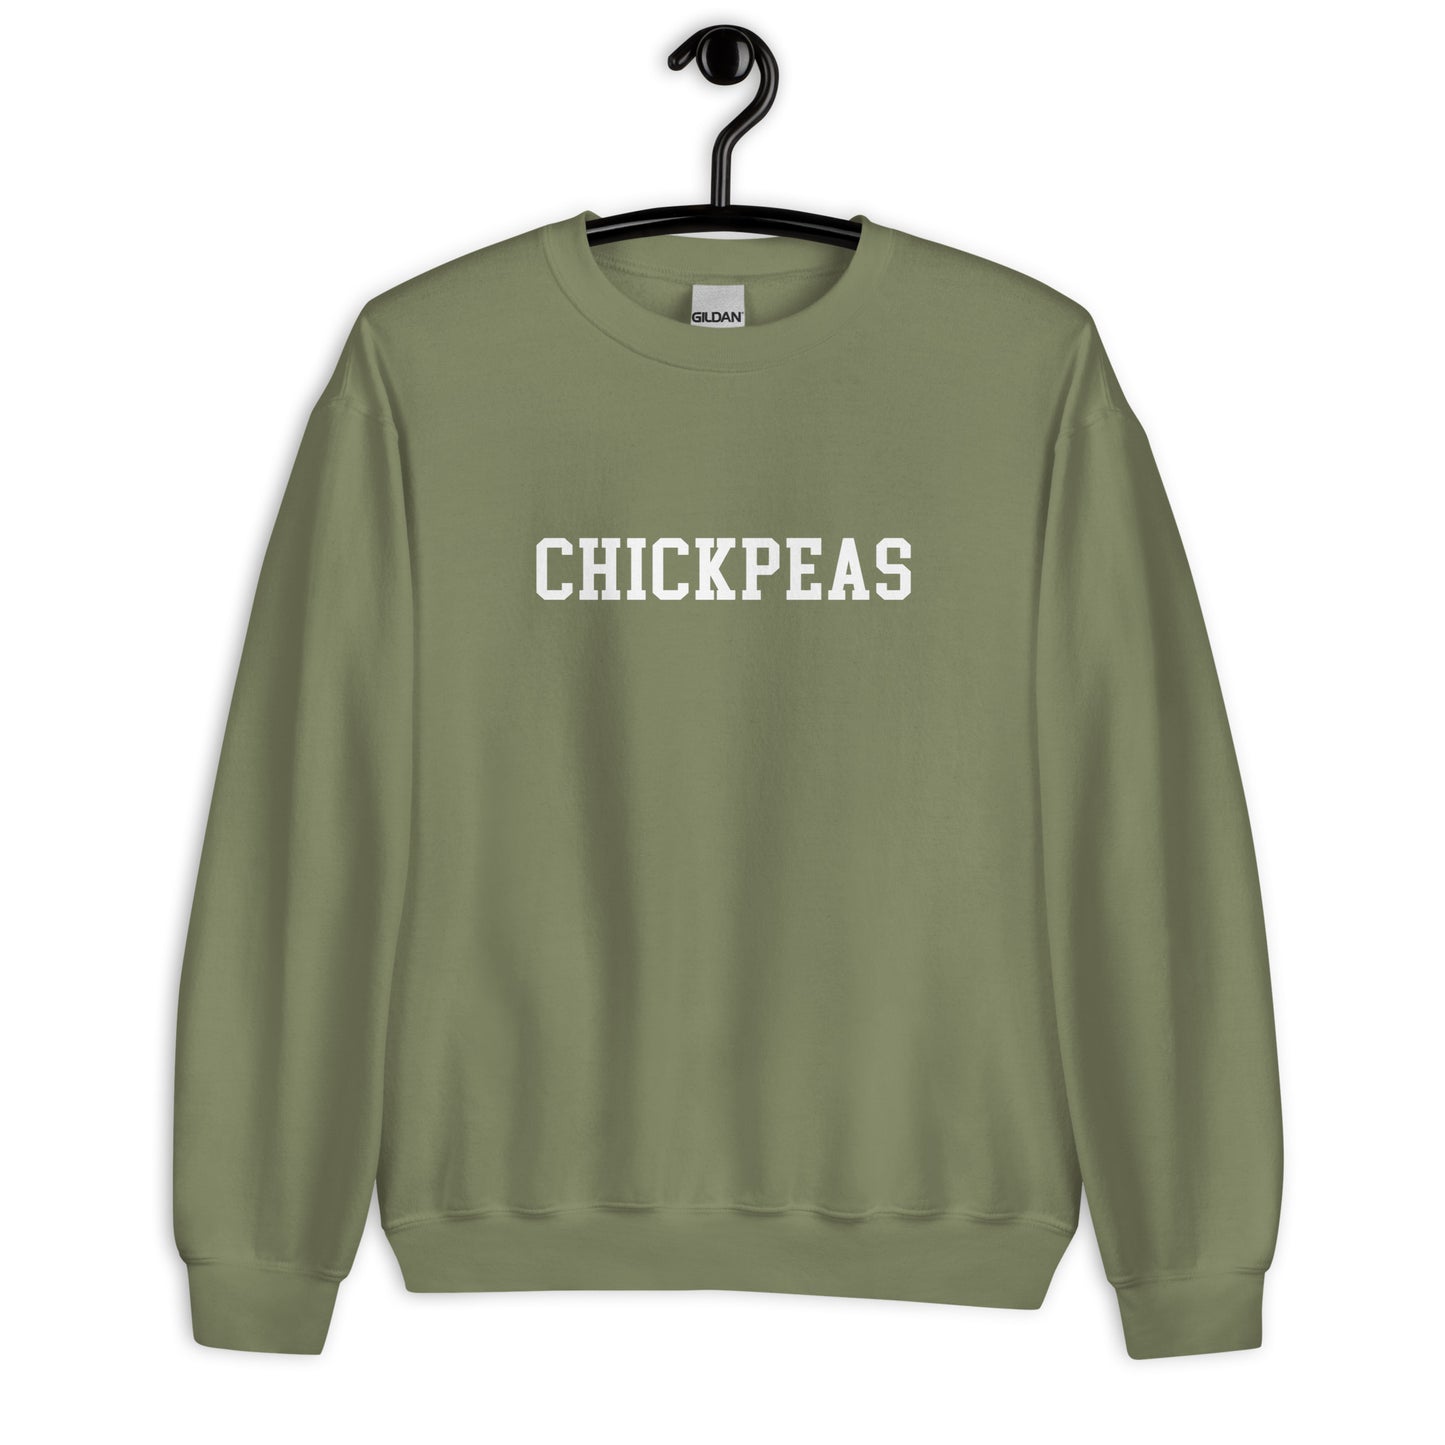 Chickpeas Sweatshirt - Straight Font